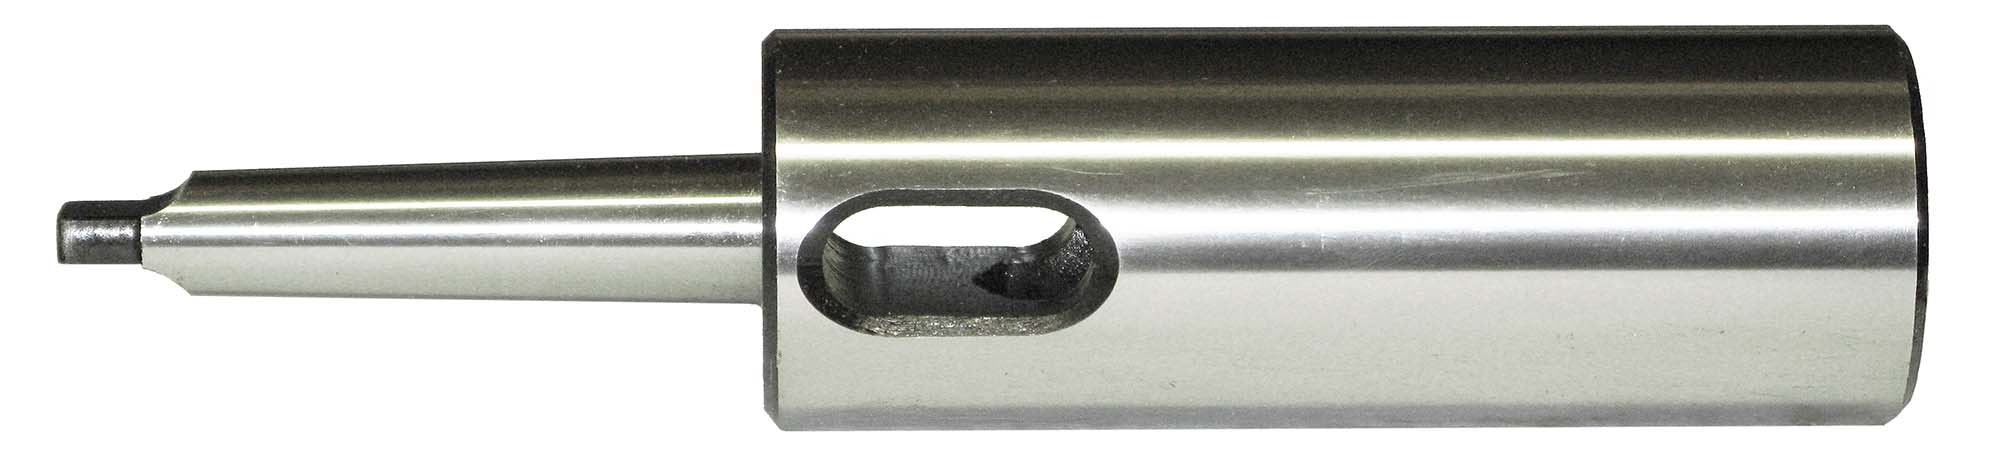 5 Morse Taper(hole)-3 Morse Taper(shank) Extension Socket, SL5-3